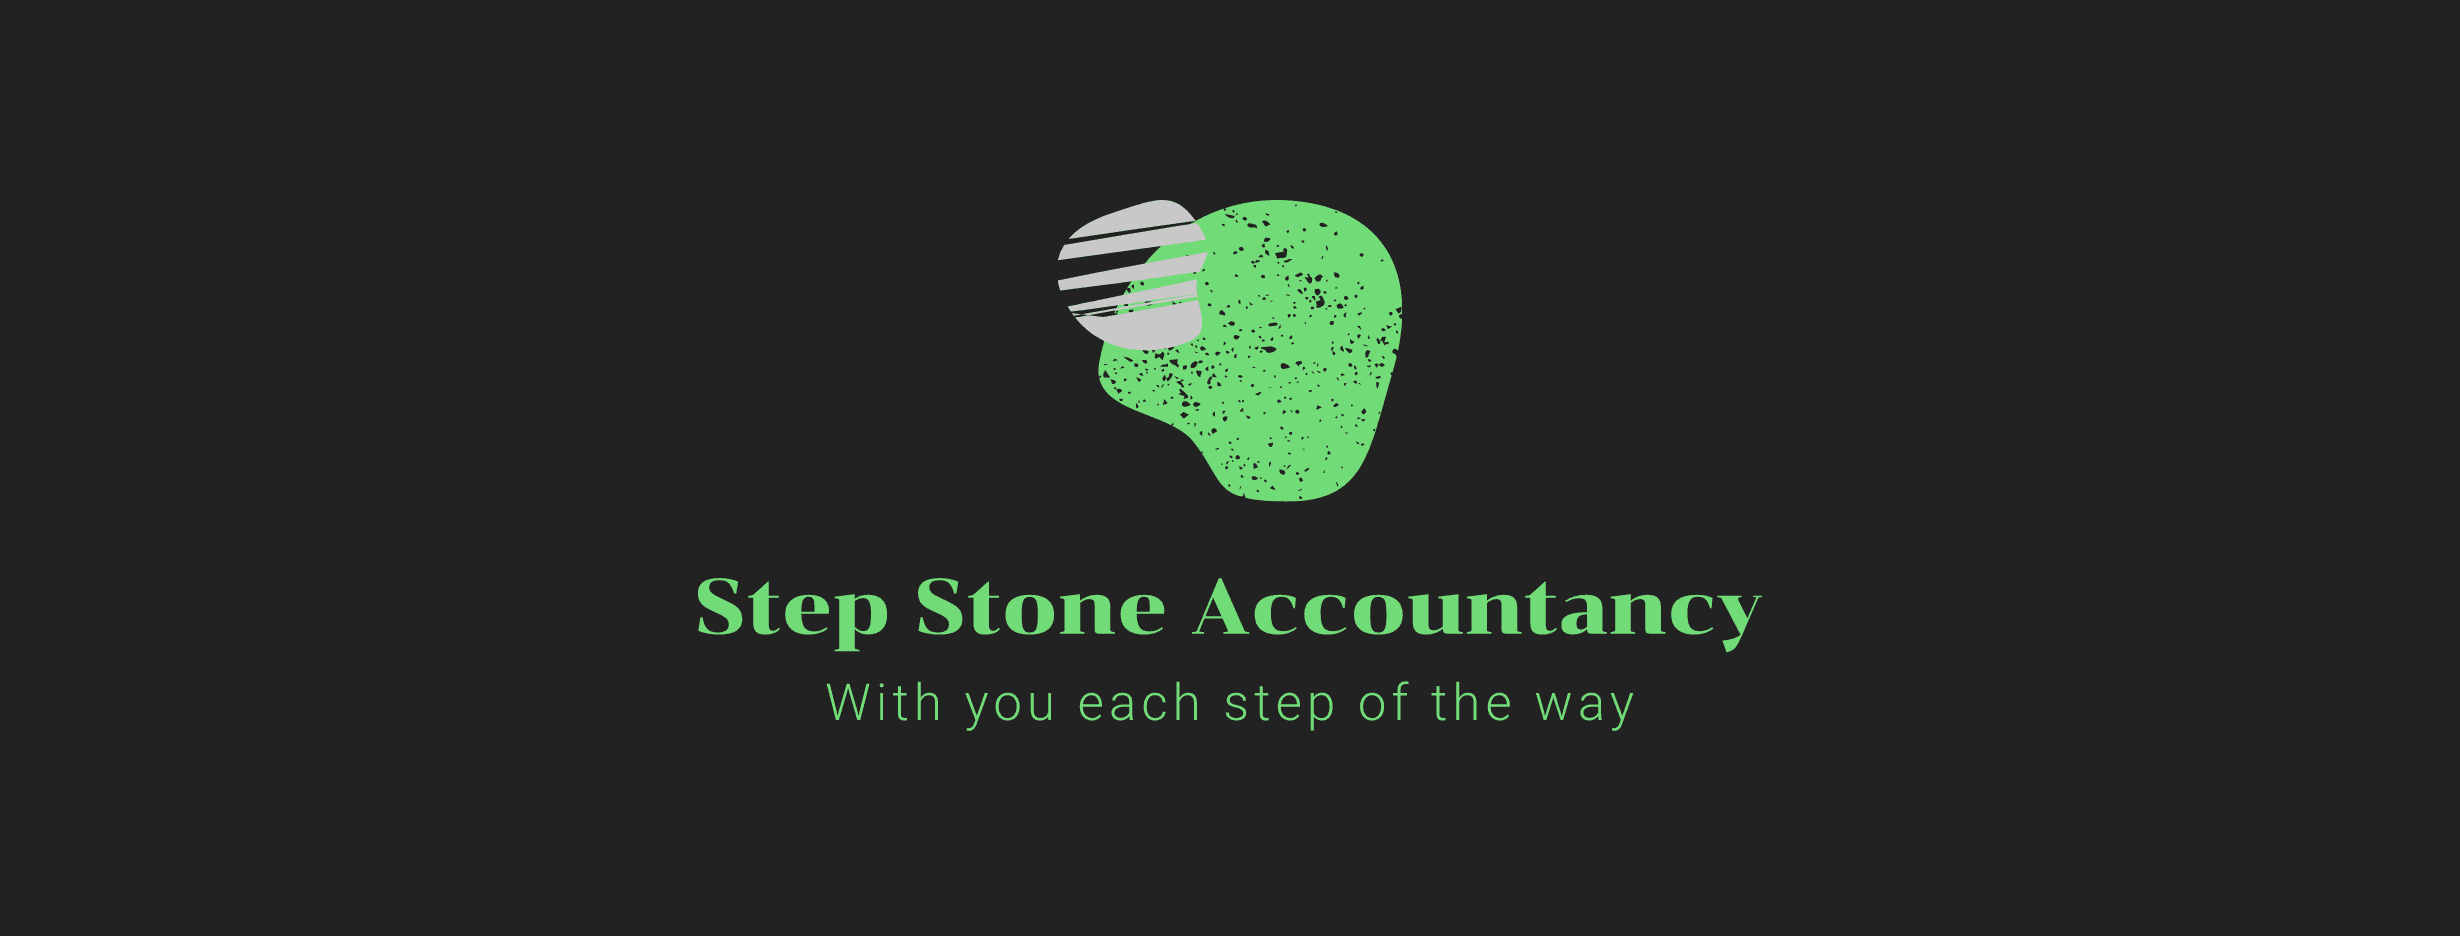 Step Stone Accountancy